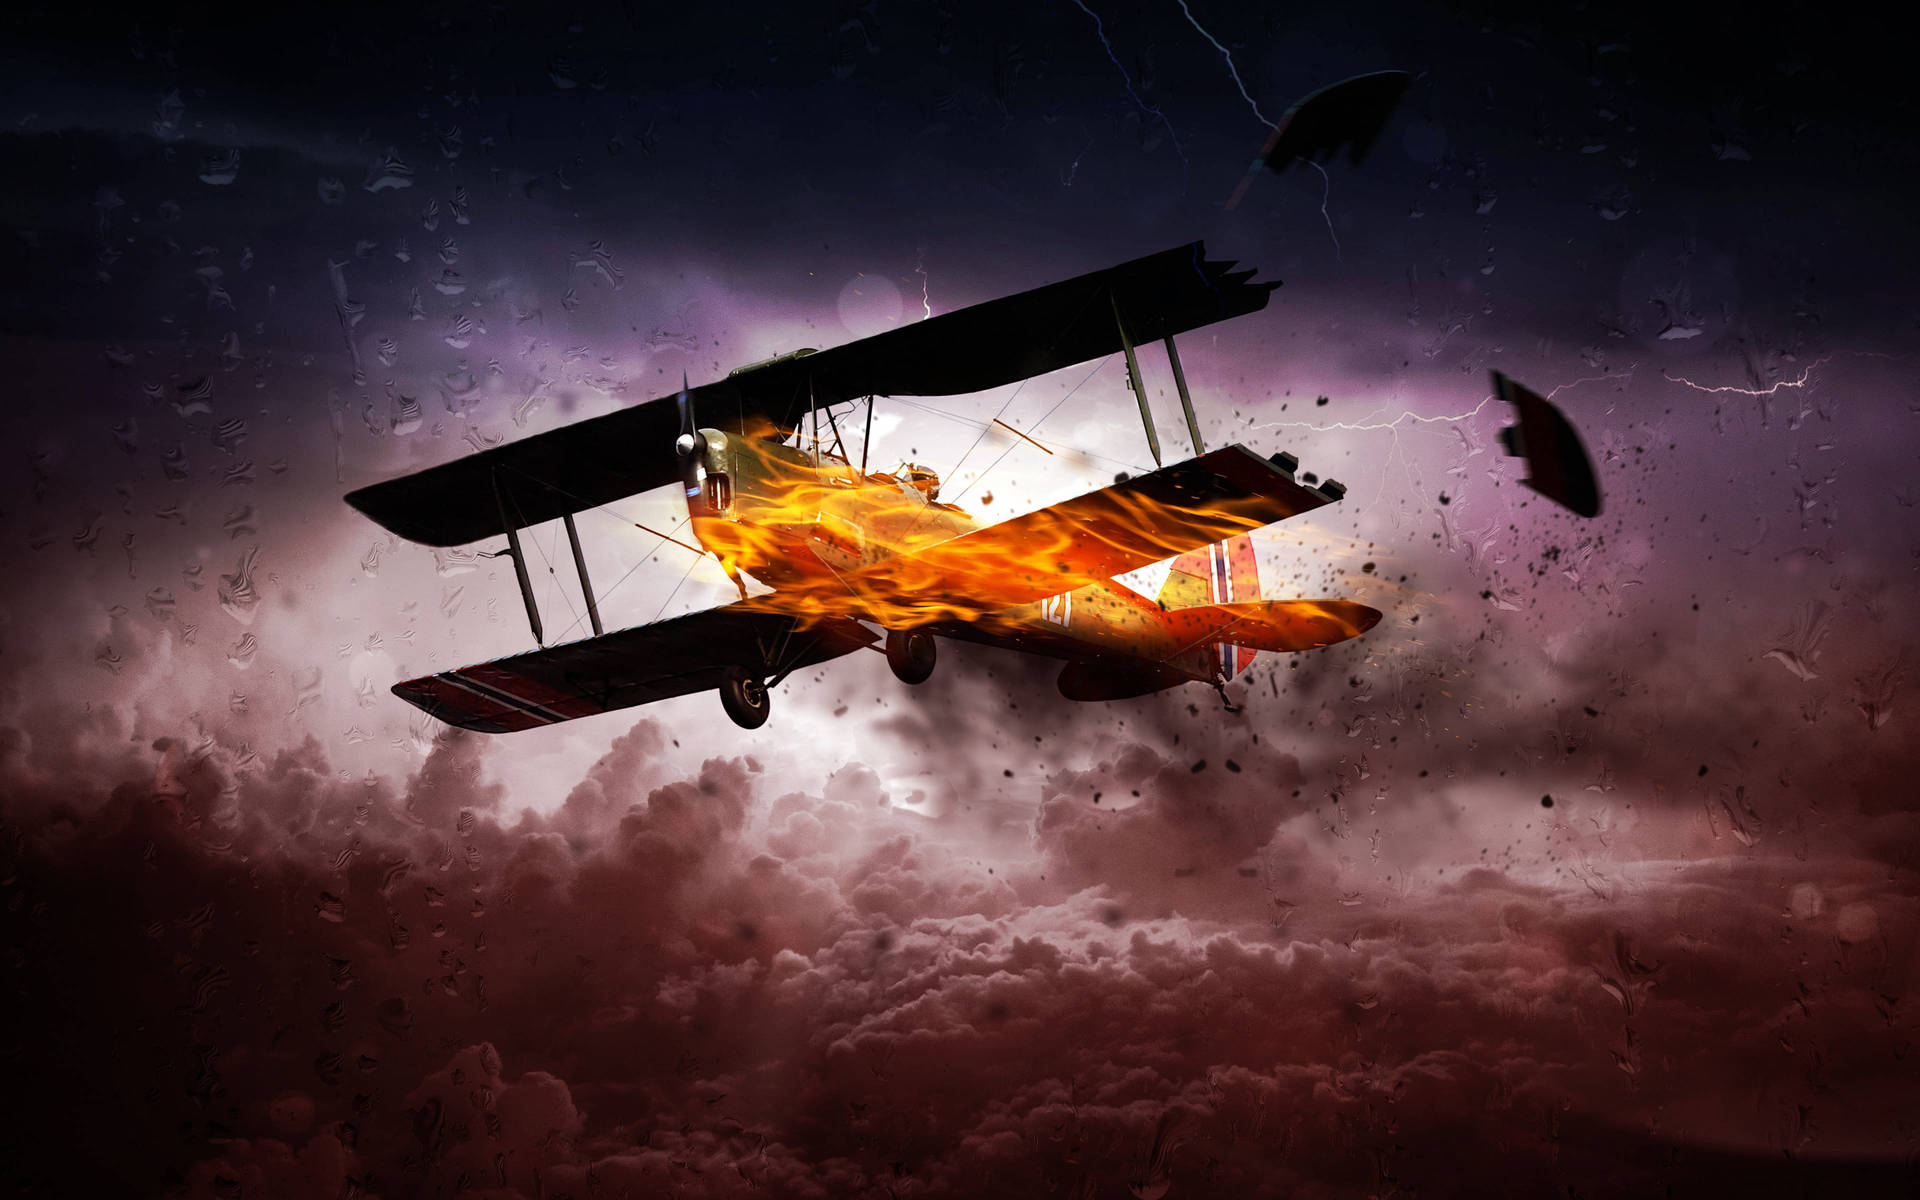 4k Plane Burning In The Sky Wallpaper